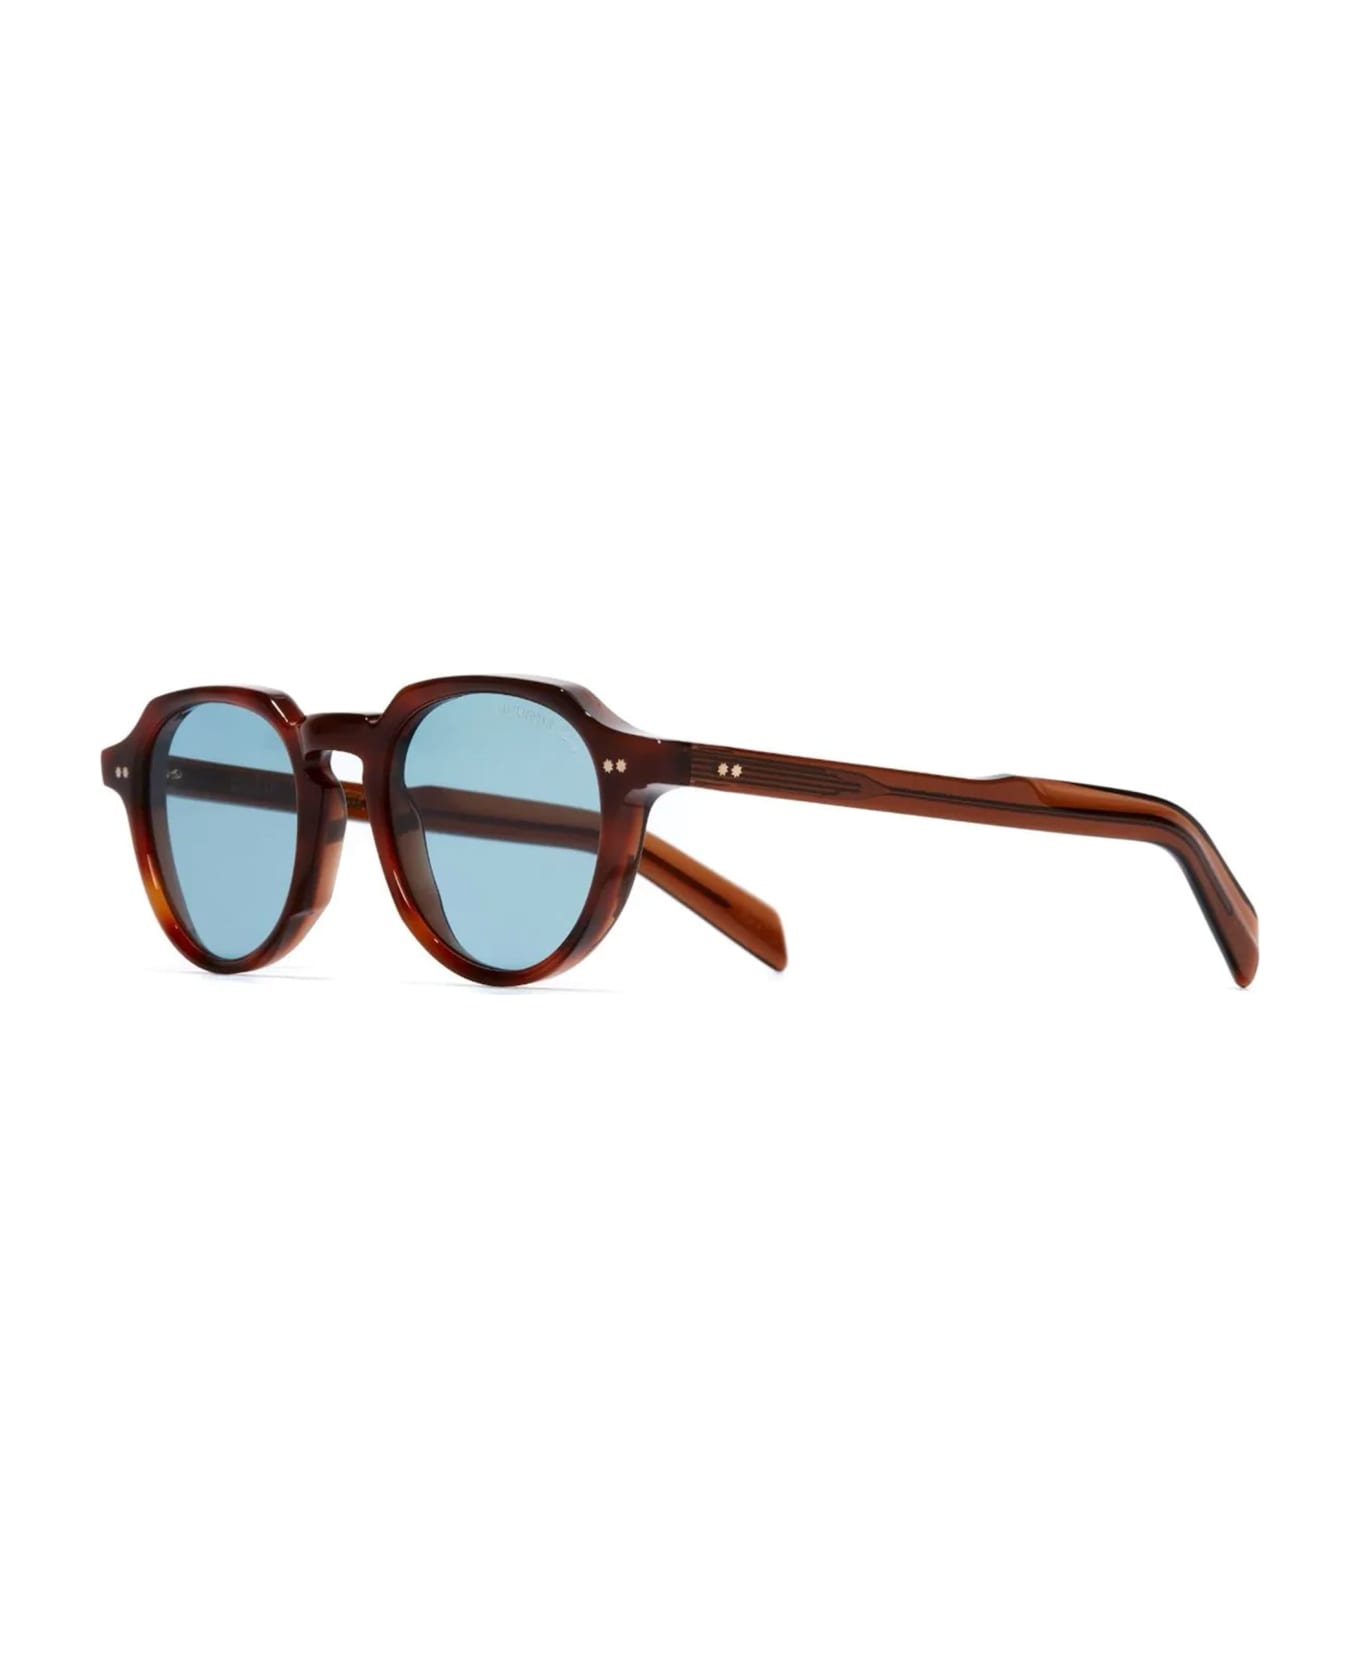 Cutler and Gross Gr06 / Vintage Sunburst Sunglasses - brown サングラス